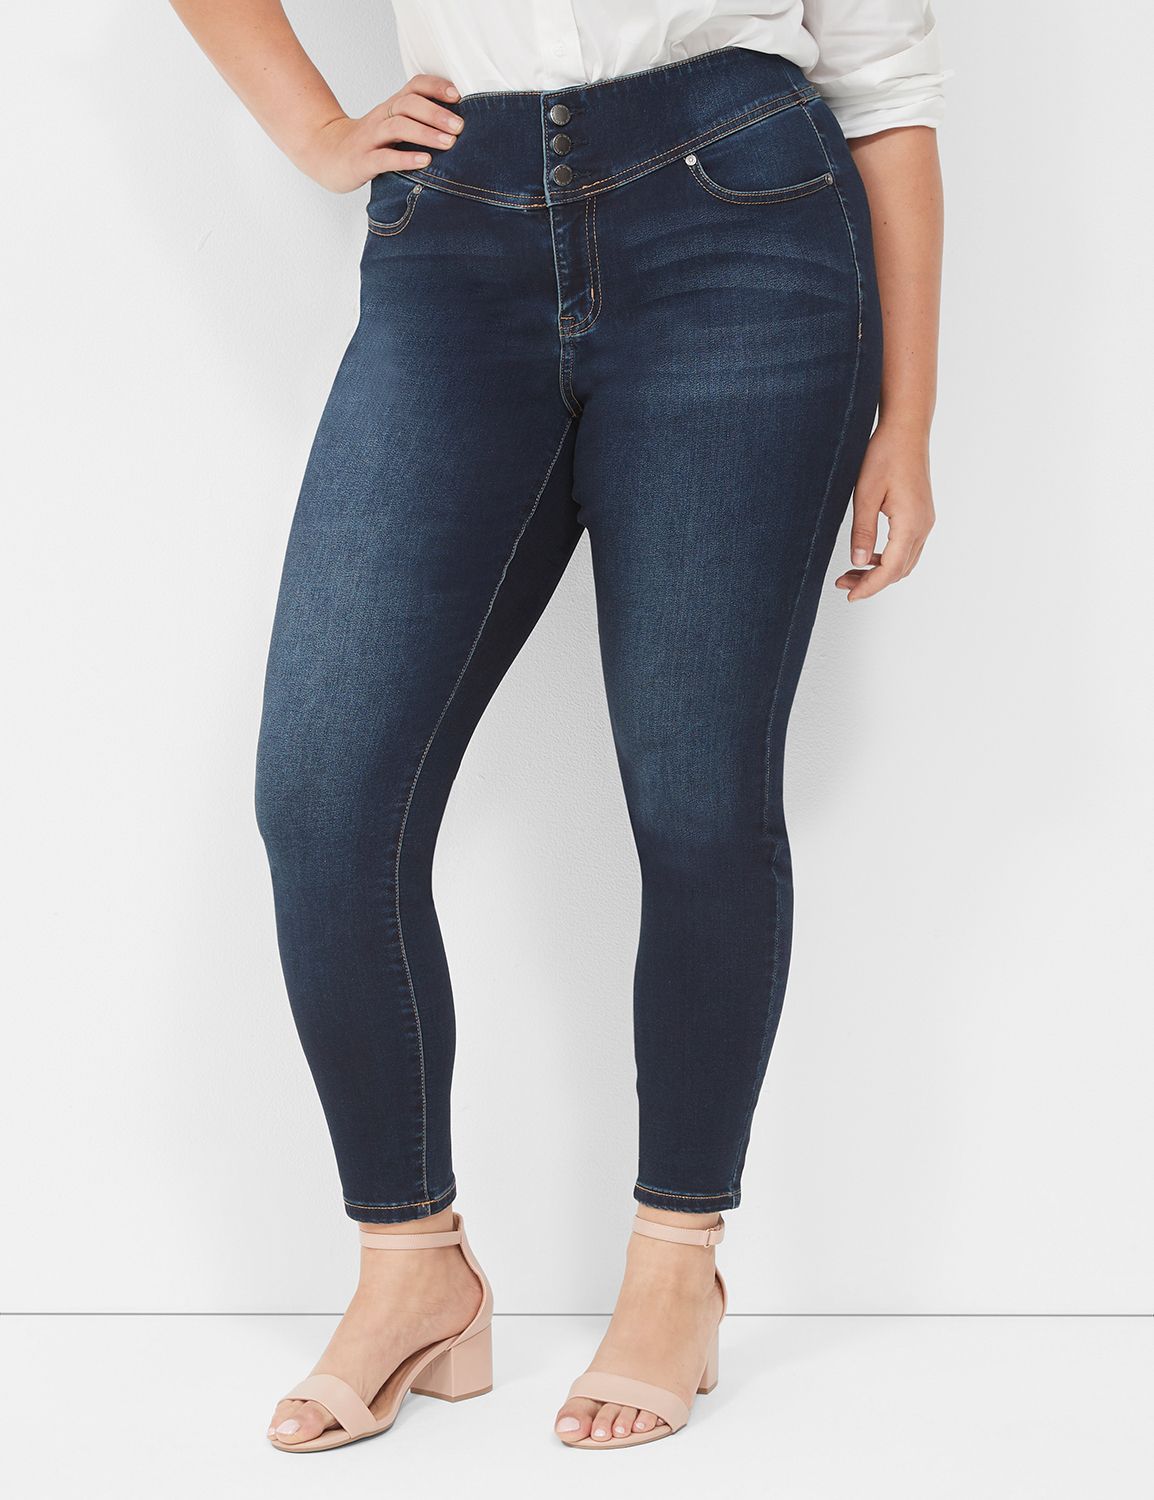 Womens Plus Size Jeans Jeggings